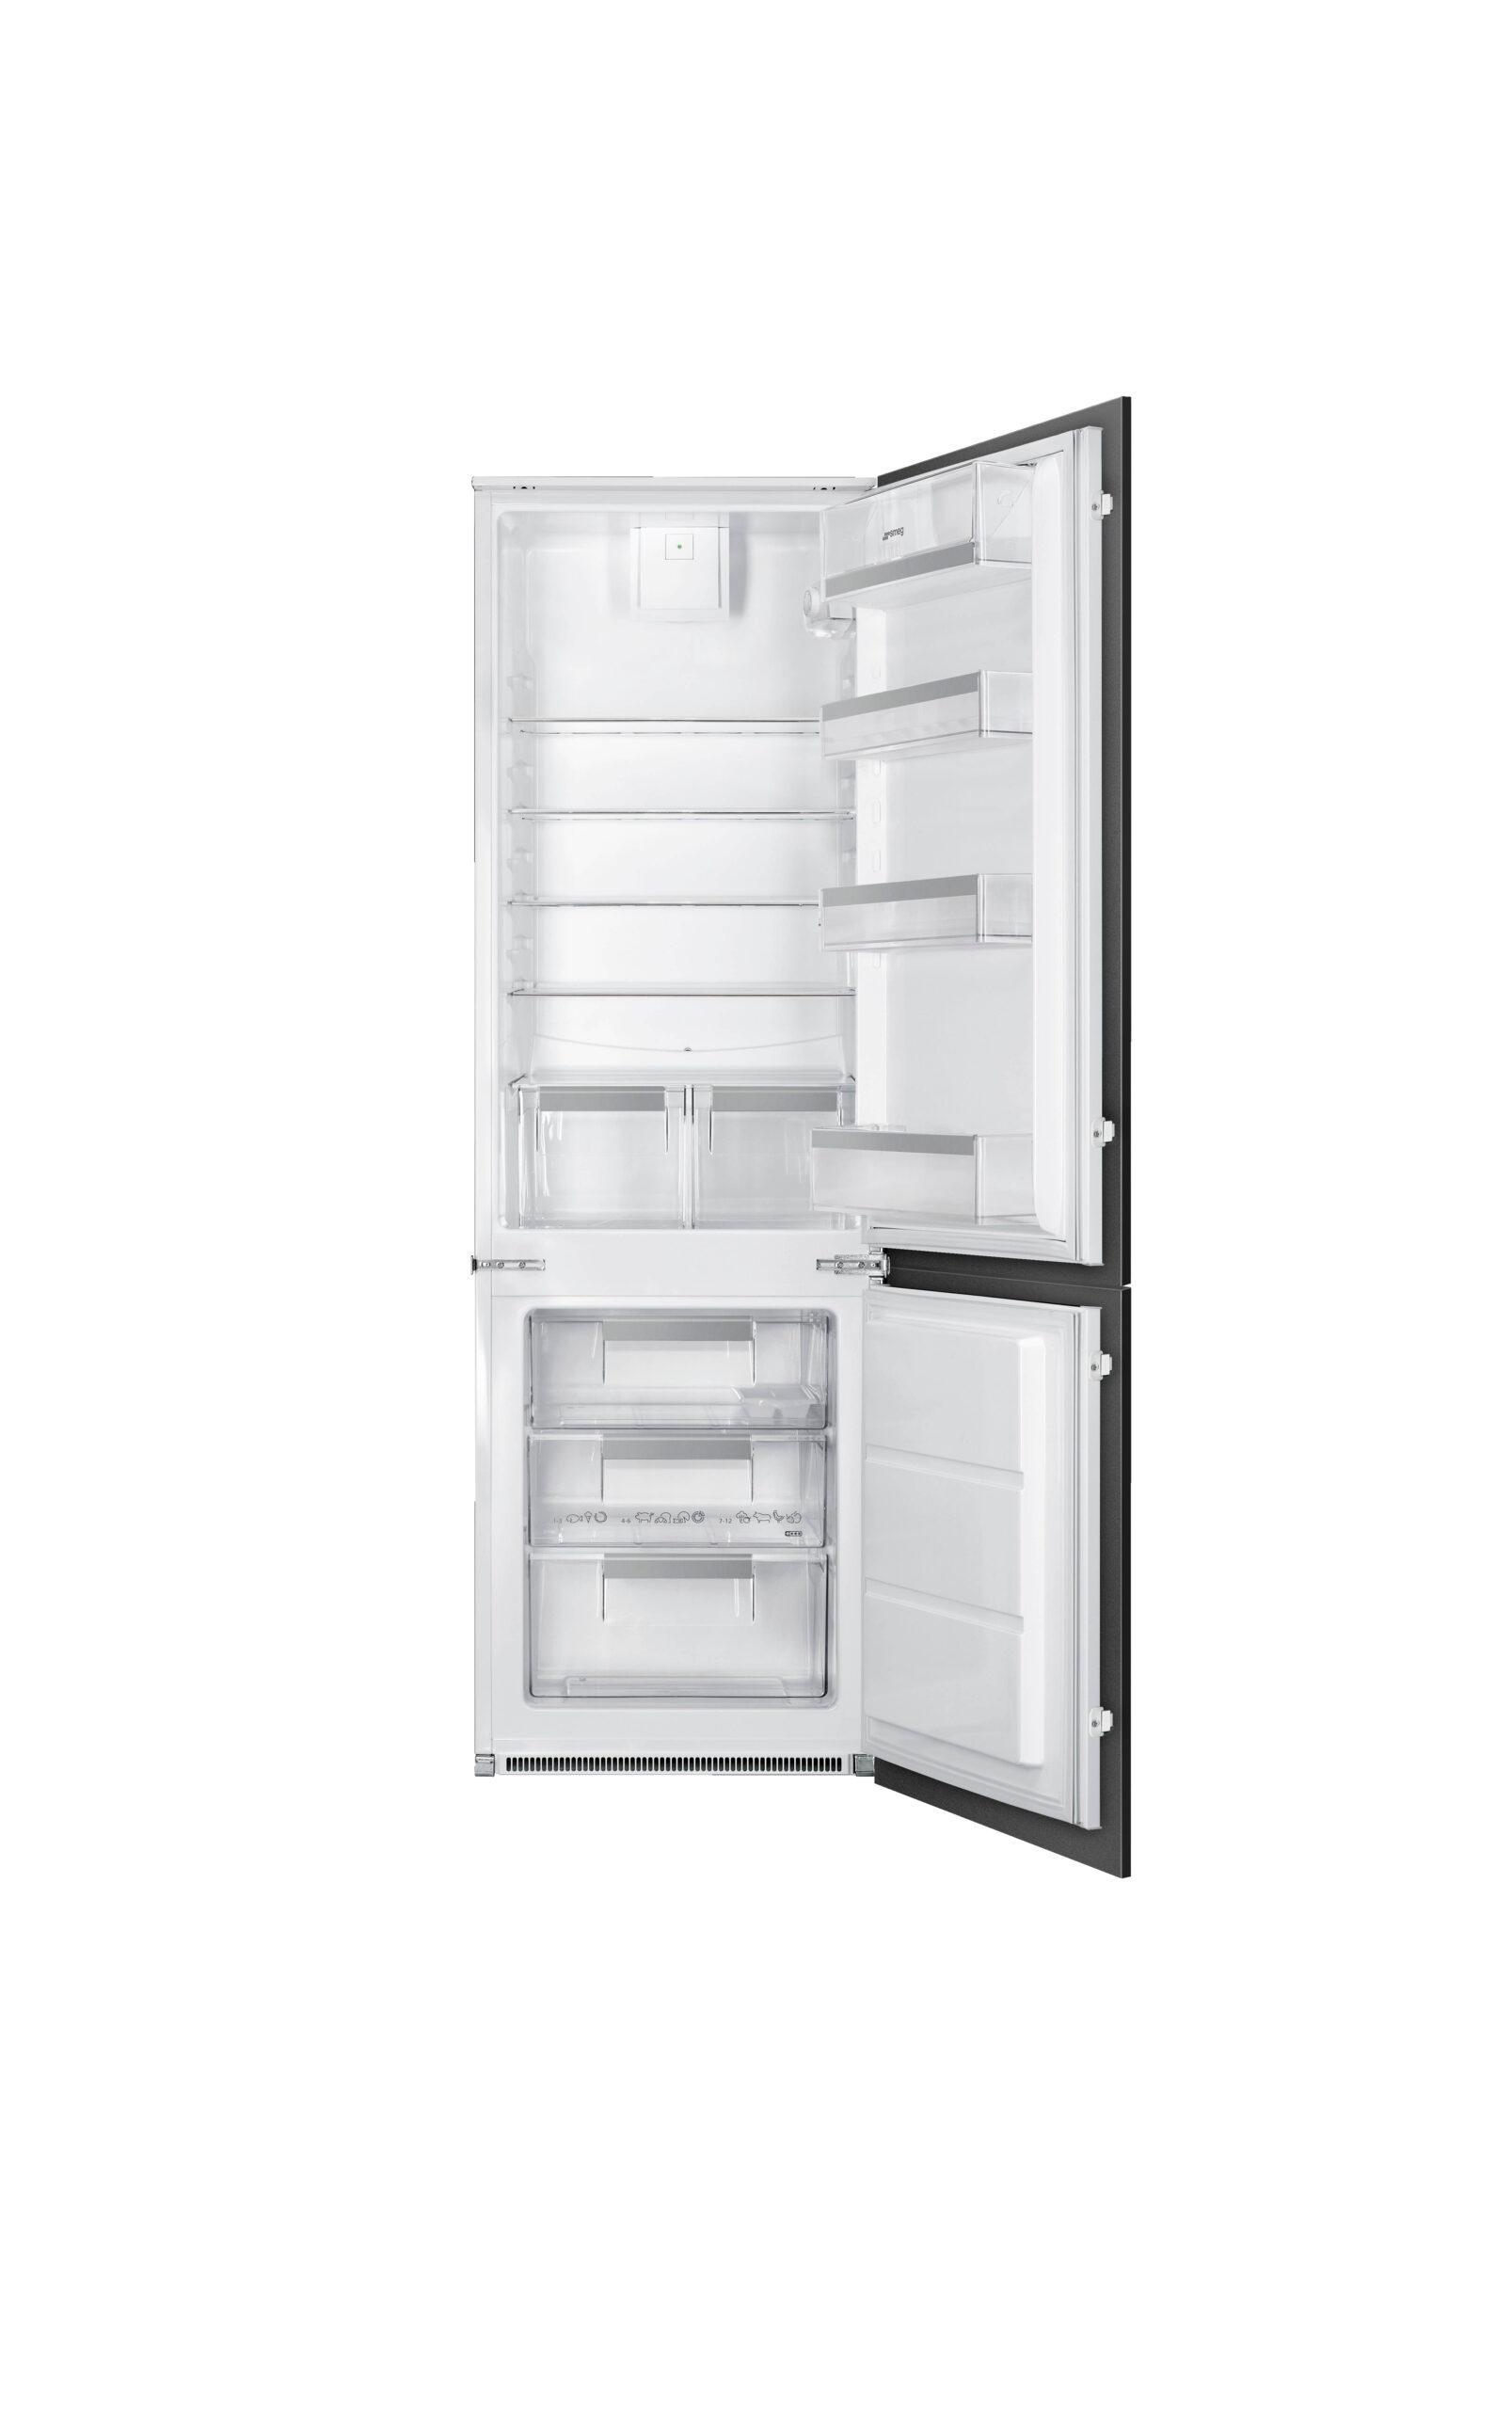 فريزر بلت ان ببابين 272 لتر سميج Smeg Built In Bottom Freezer Refrigerator